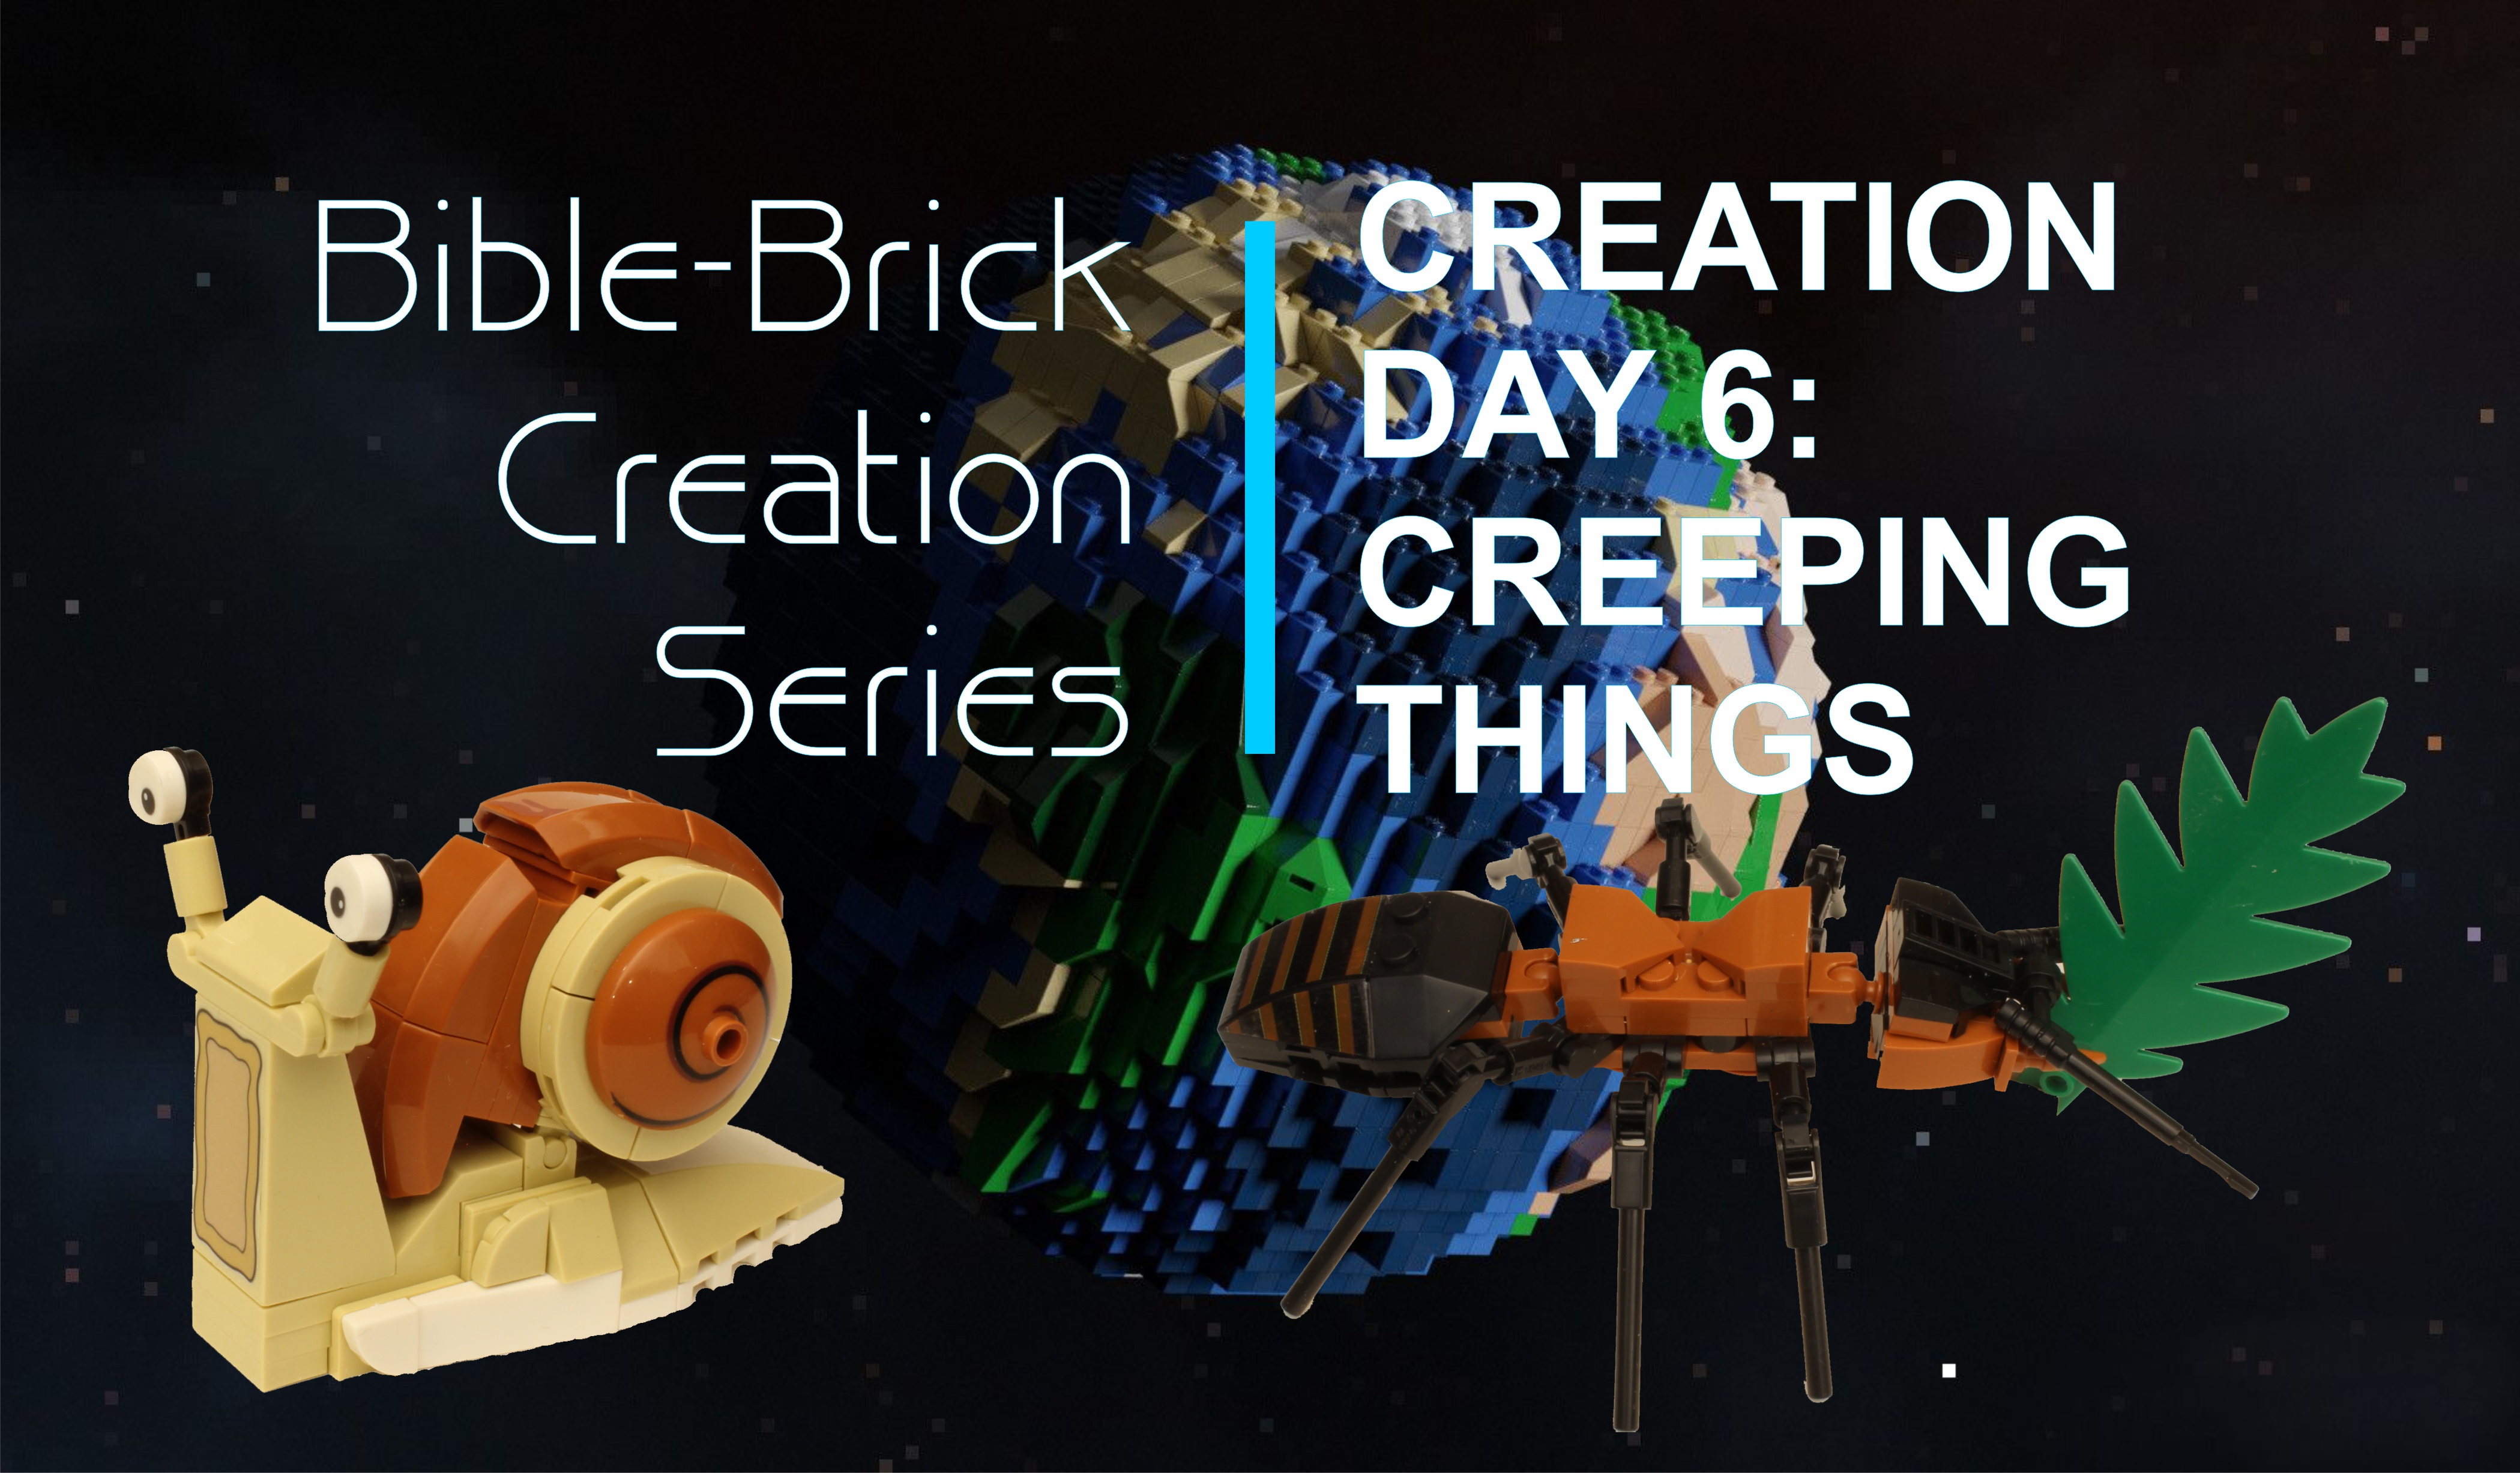 Creation #24 Day 6 Creeping Things